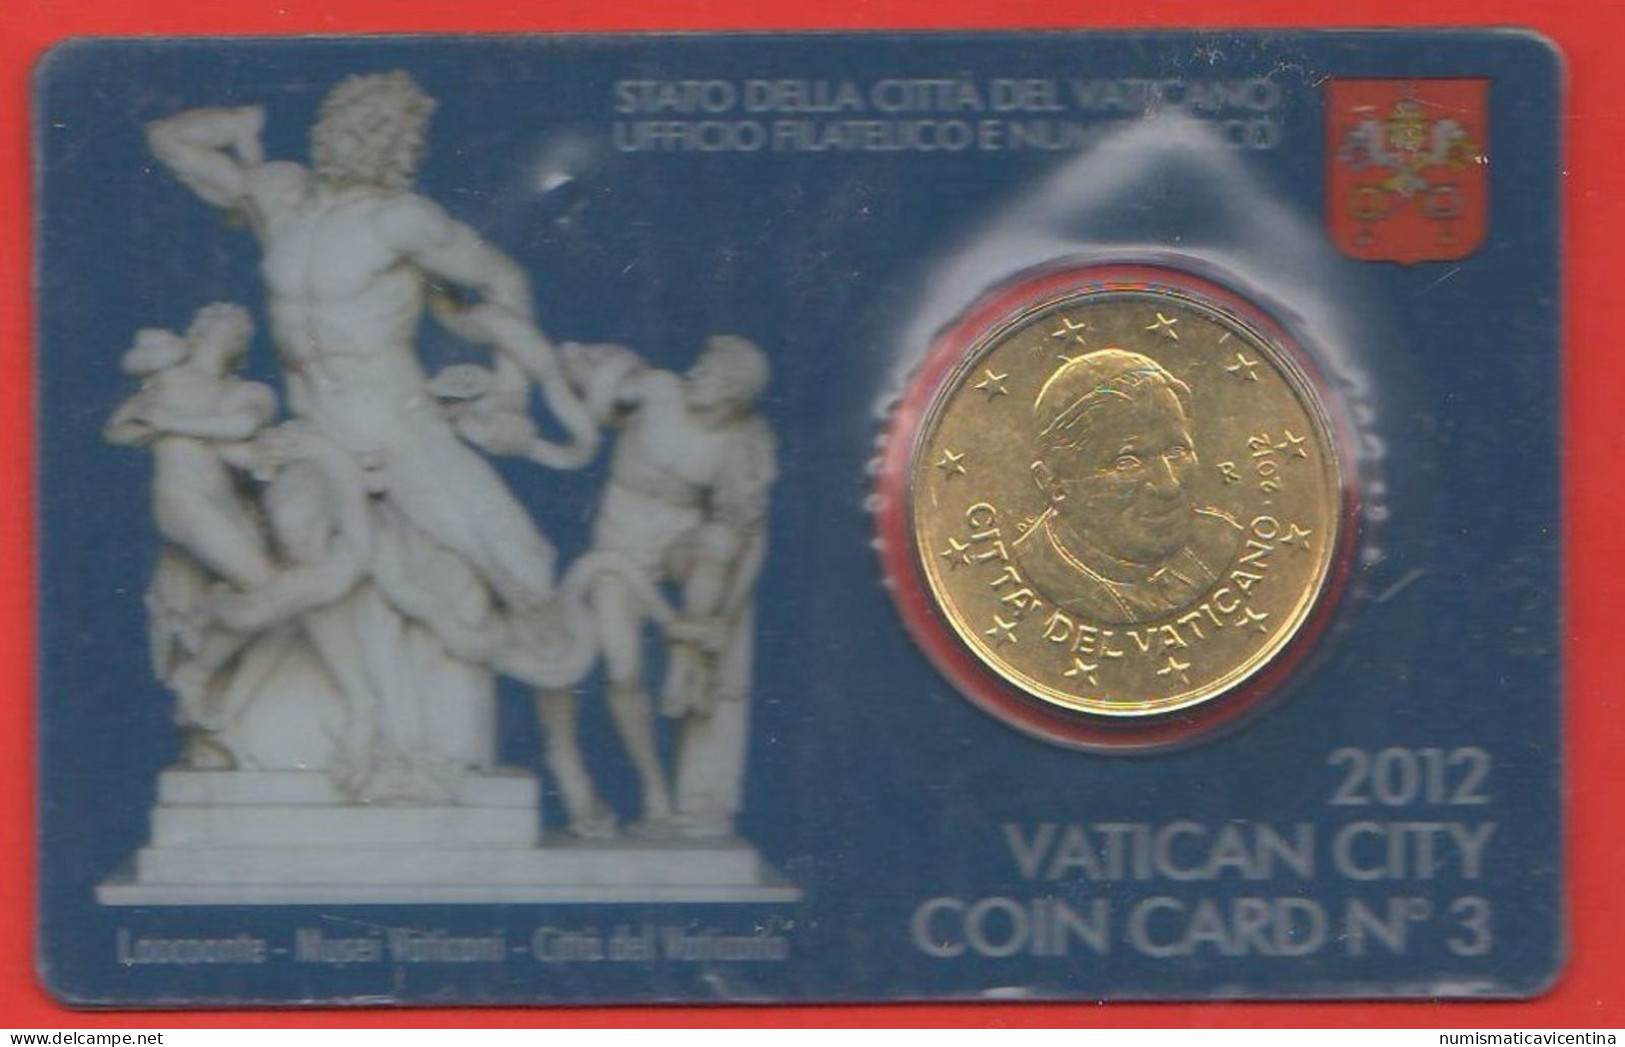 Vaticano 50 Cents 2012 Coin Card Benedetto XVI° Vatikan State Blister N° 3 Mint Roma 0,50 € - Vatikan